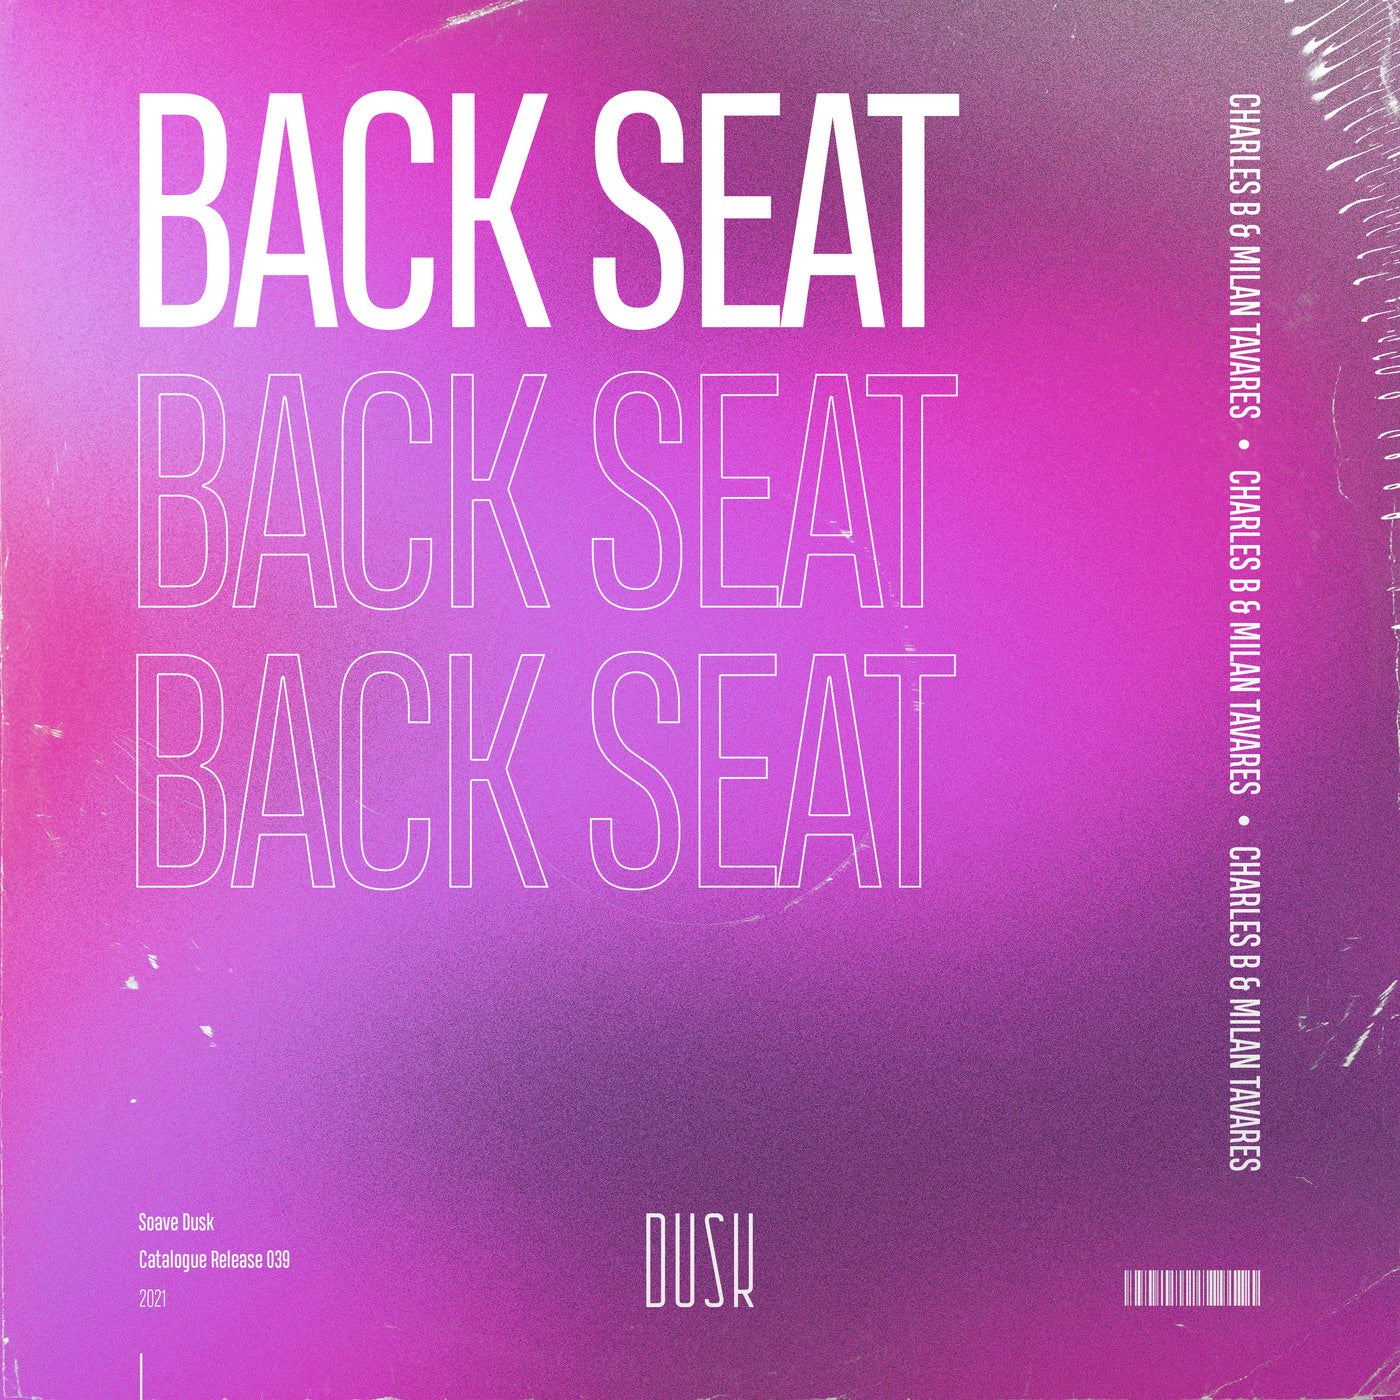 Back Seat